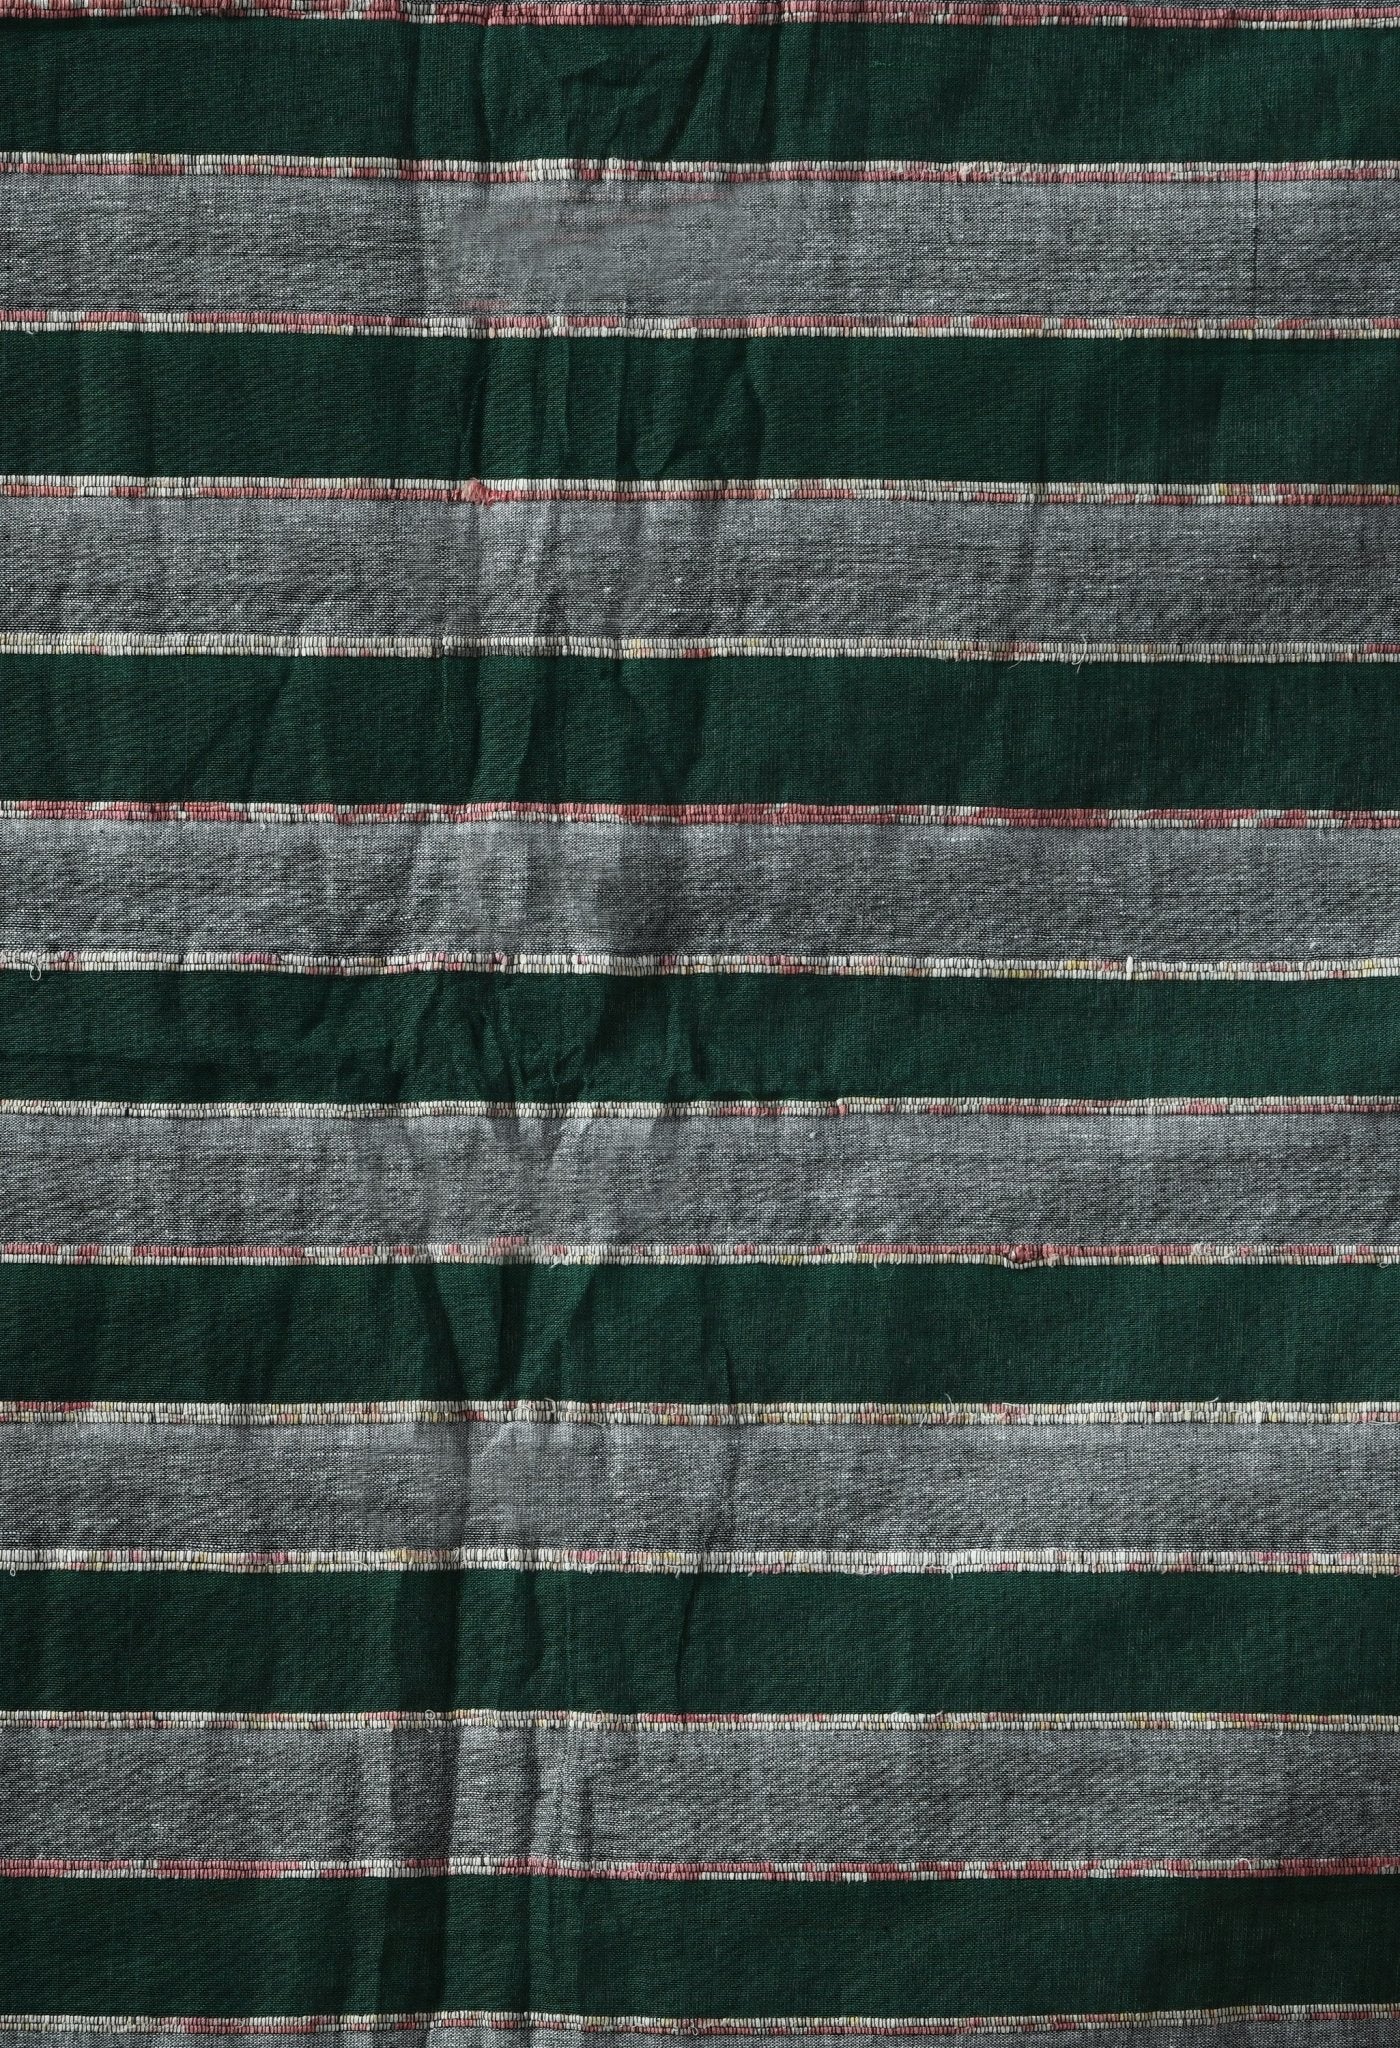 Green-Grey Khesh Saree with Stripes - Swapna Creation